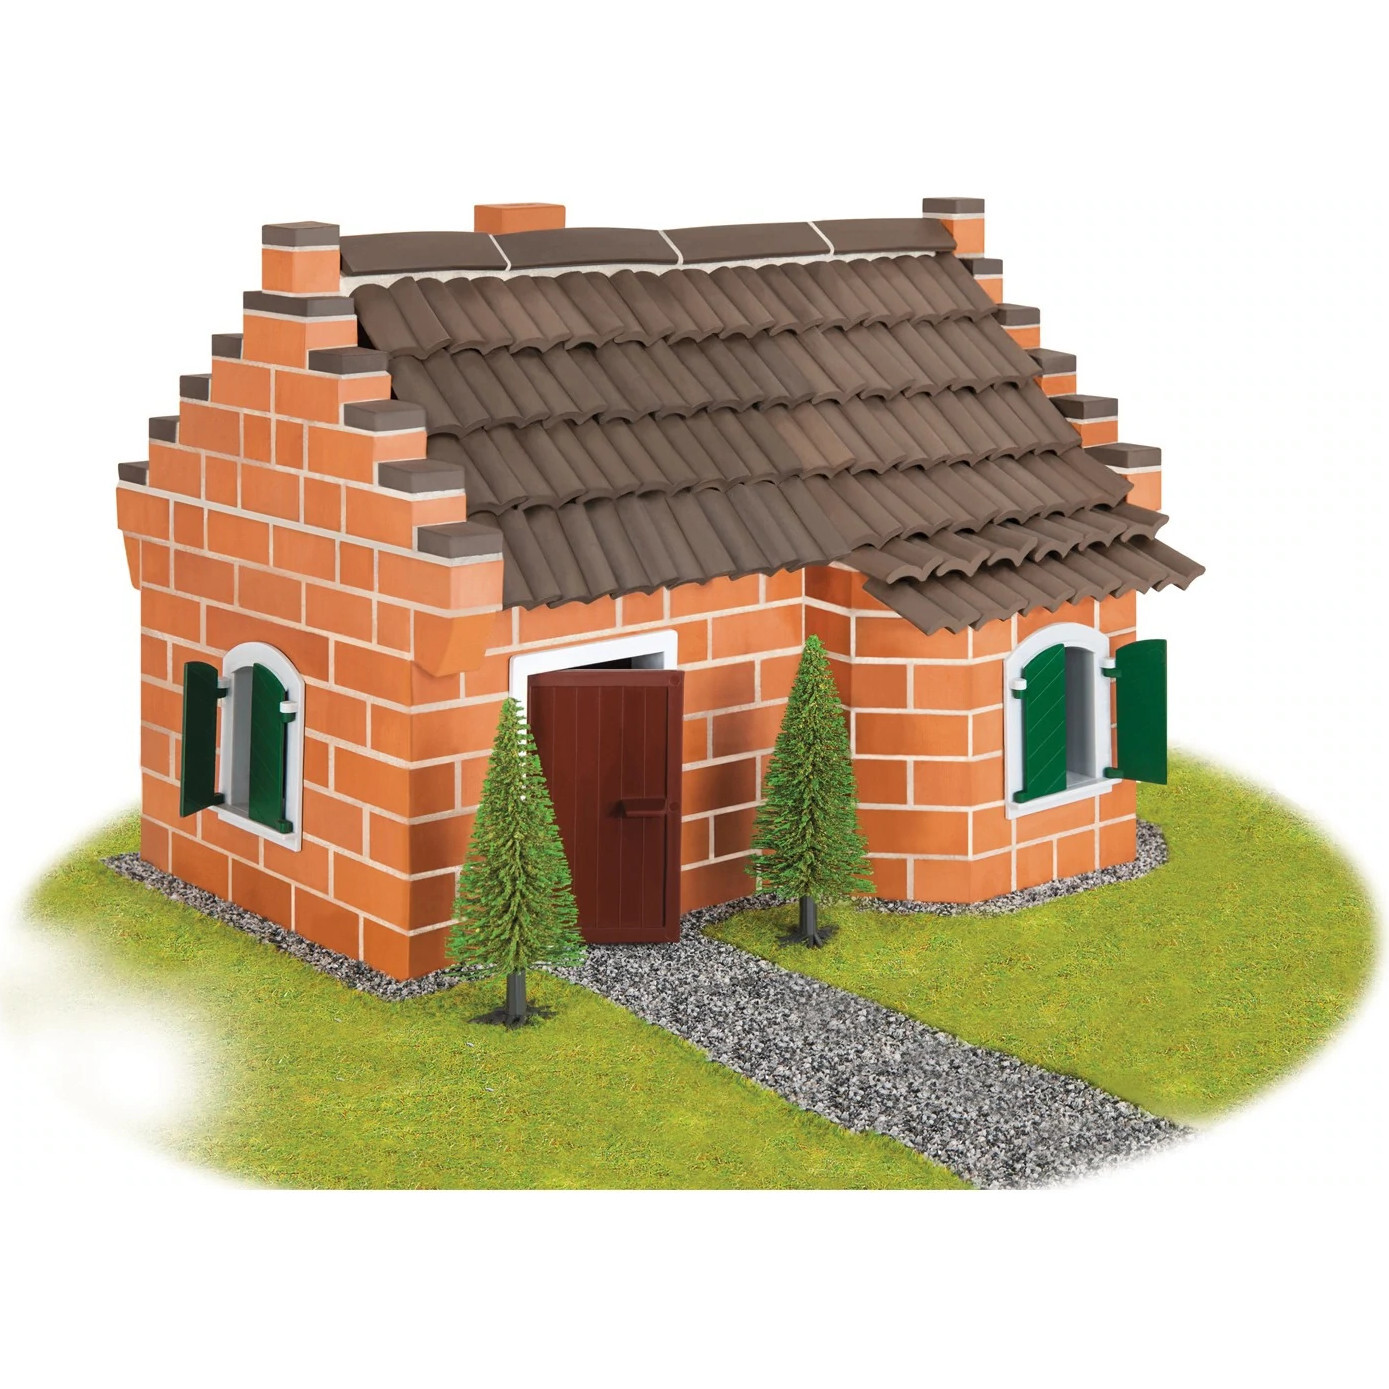 Teifoc 4900 Historic House Brick Construction Set